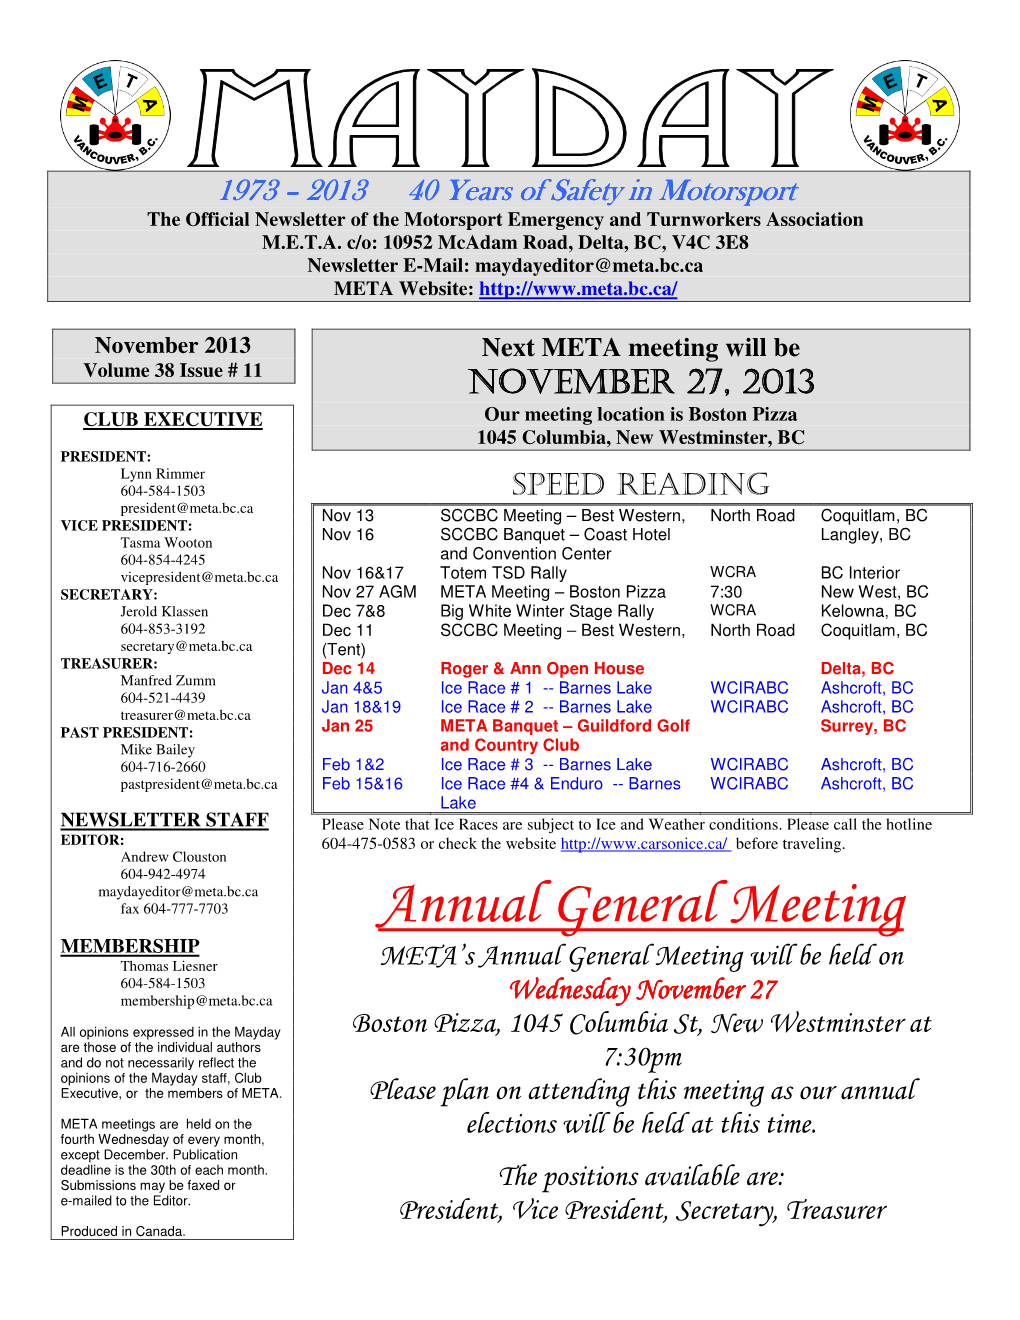 Annual General Meeting MEMBERSHIP Thomas Liesner META’S Annual General Meeting Will Be Held on 604-584-1503 Membership@Meta.Bc.Ca Wednesday November 27